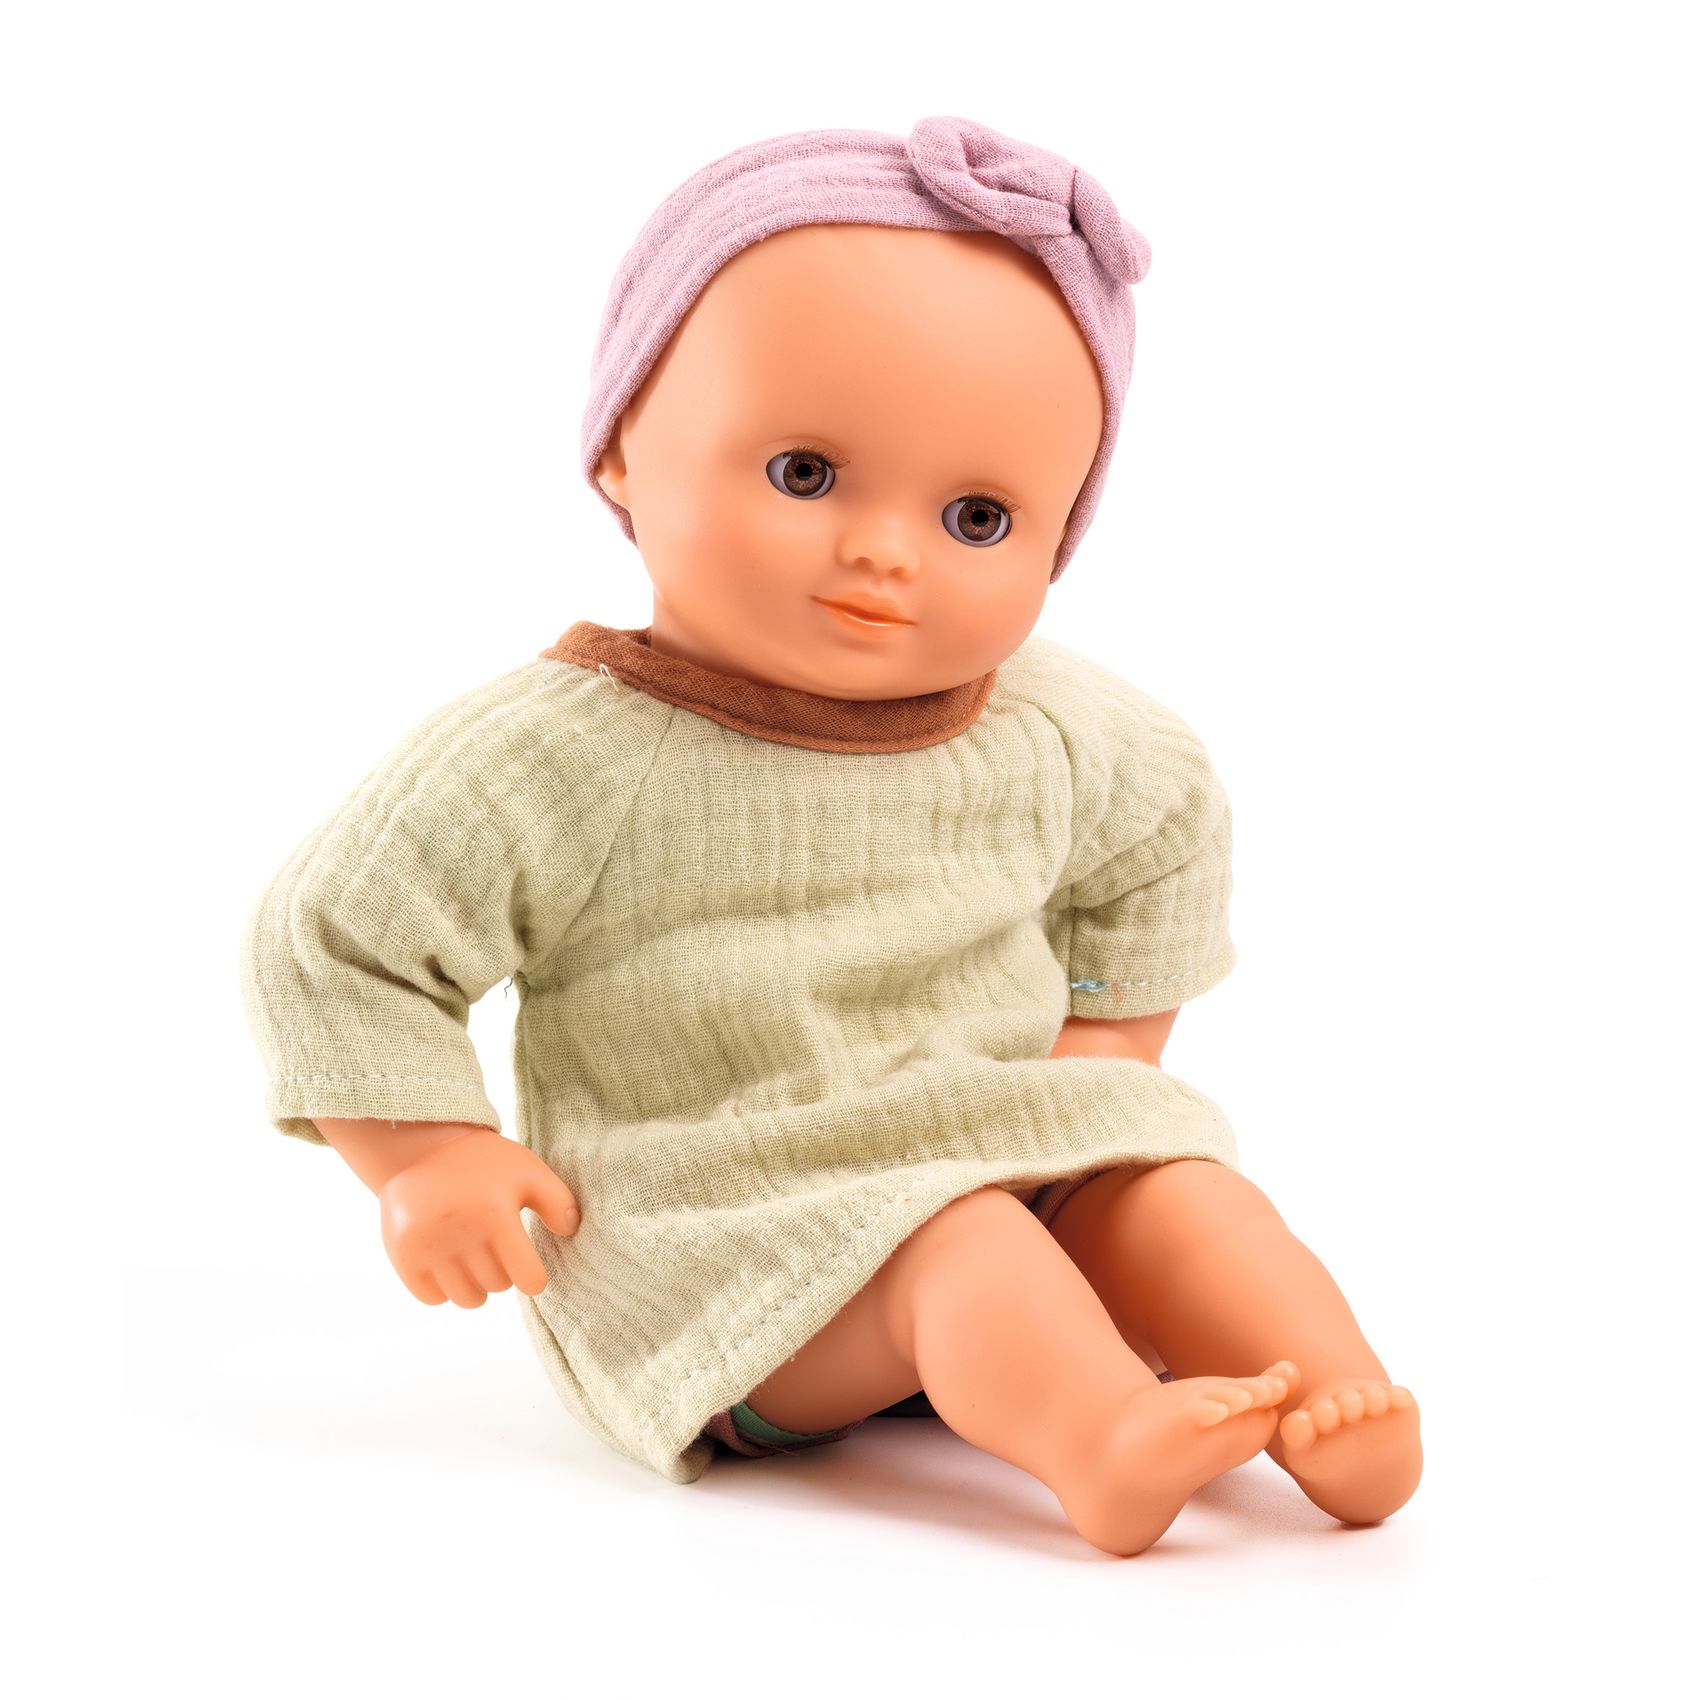 Baby doll pistache by Pomea for Djeco